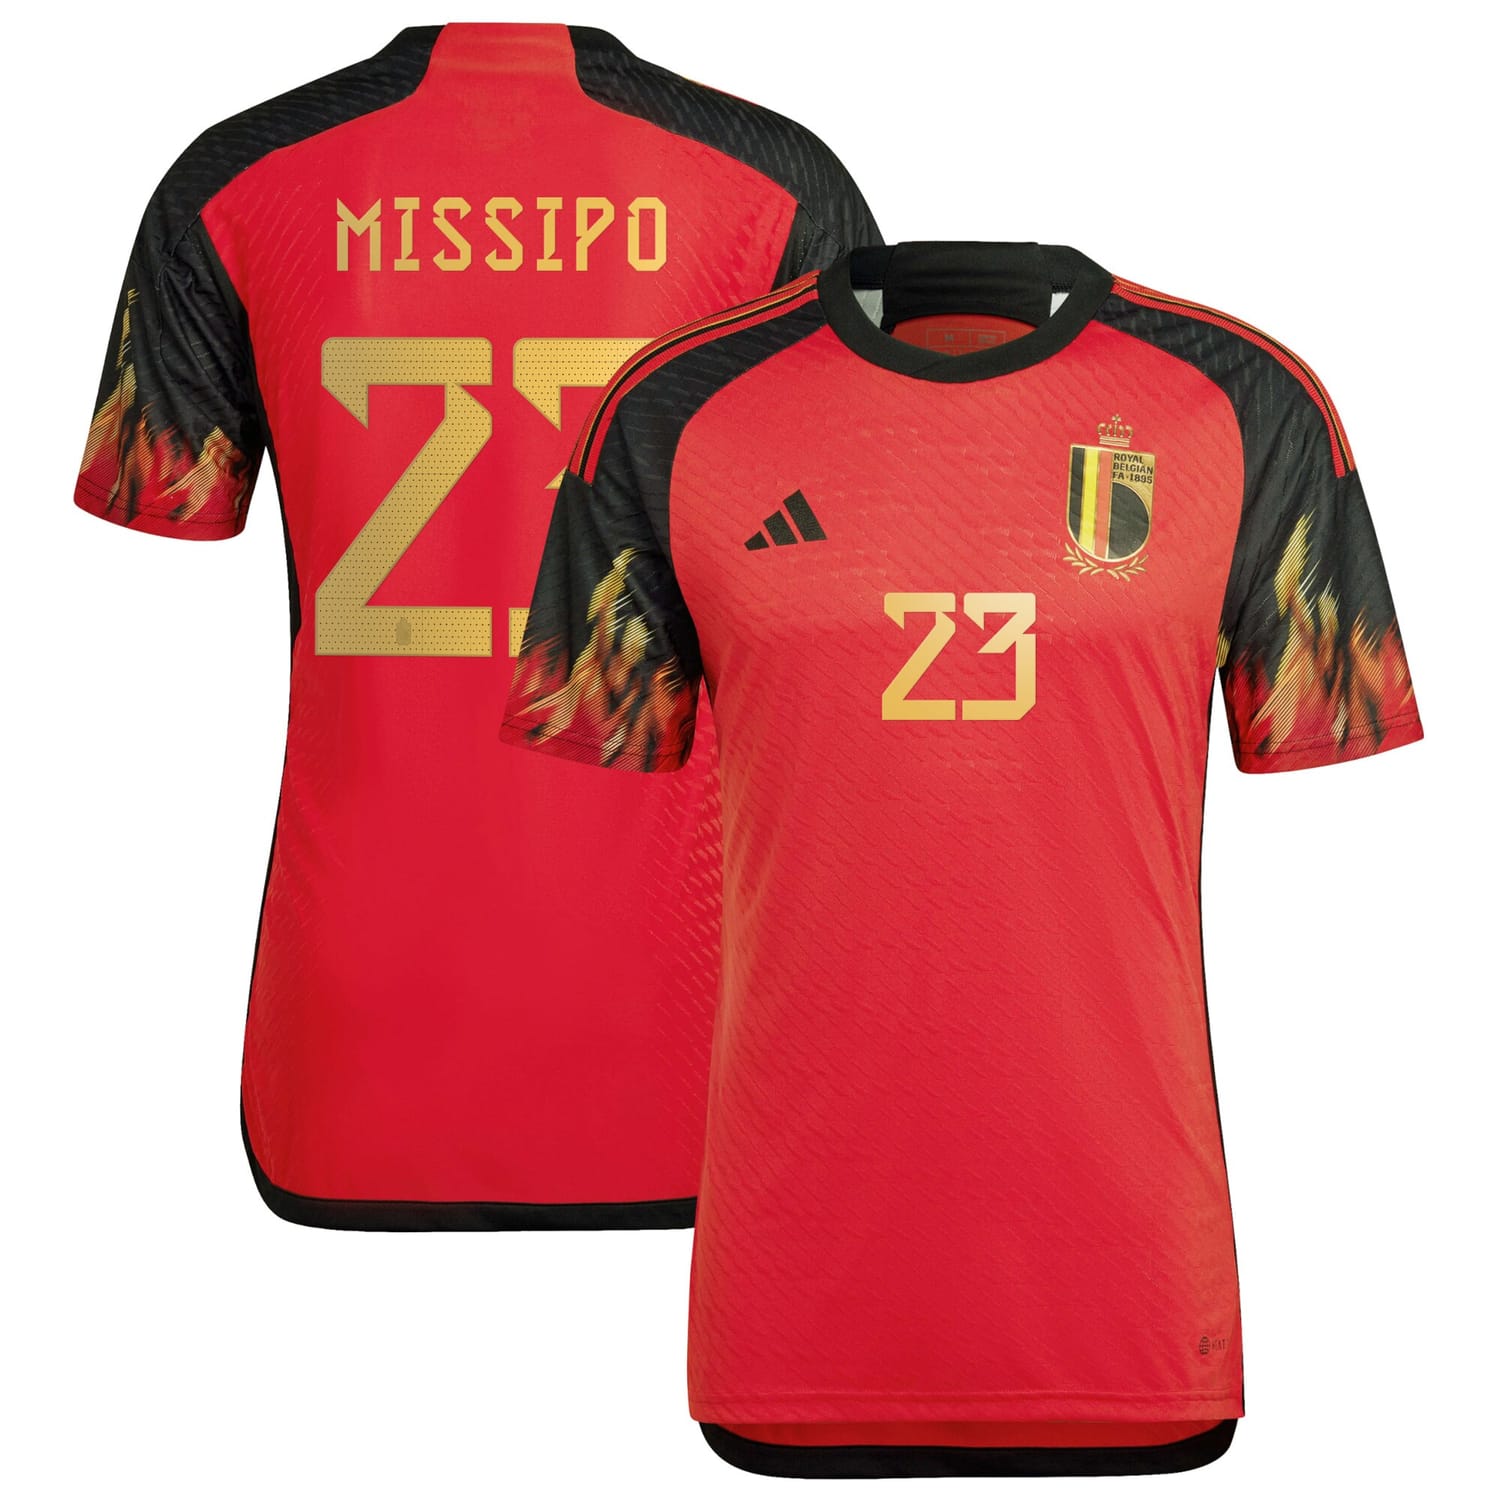 Belgium National Team Home Authentic Jersey Shirt 2022 player Kassandra Missipo 23 printing for Men